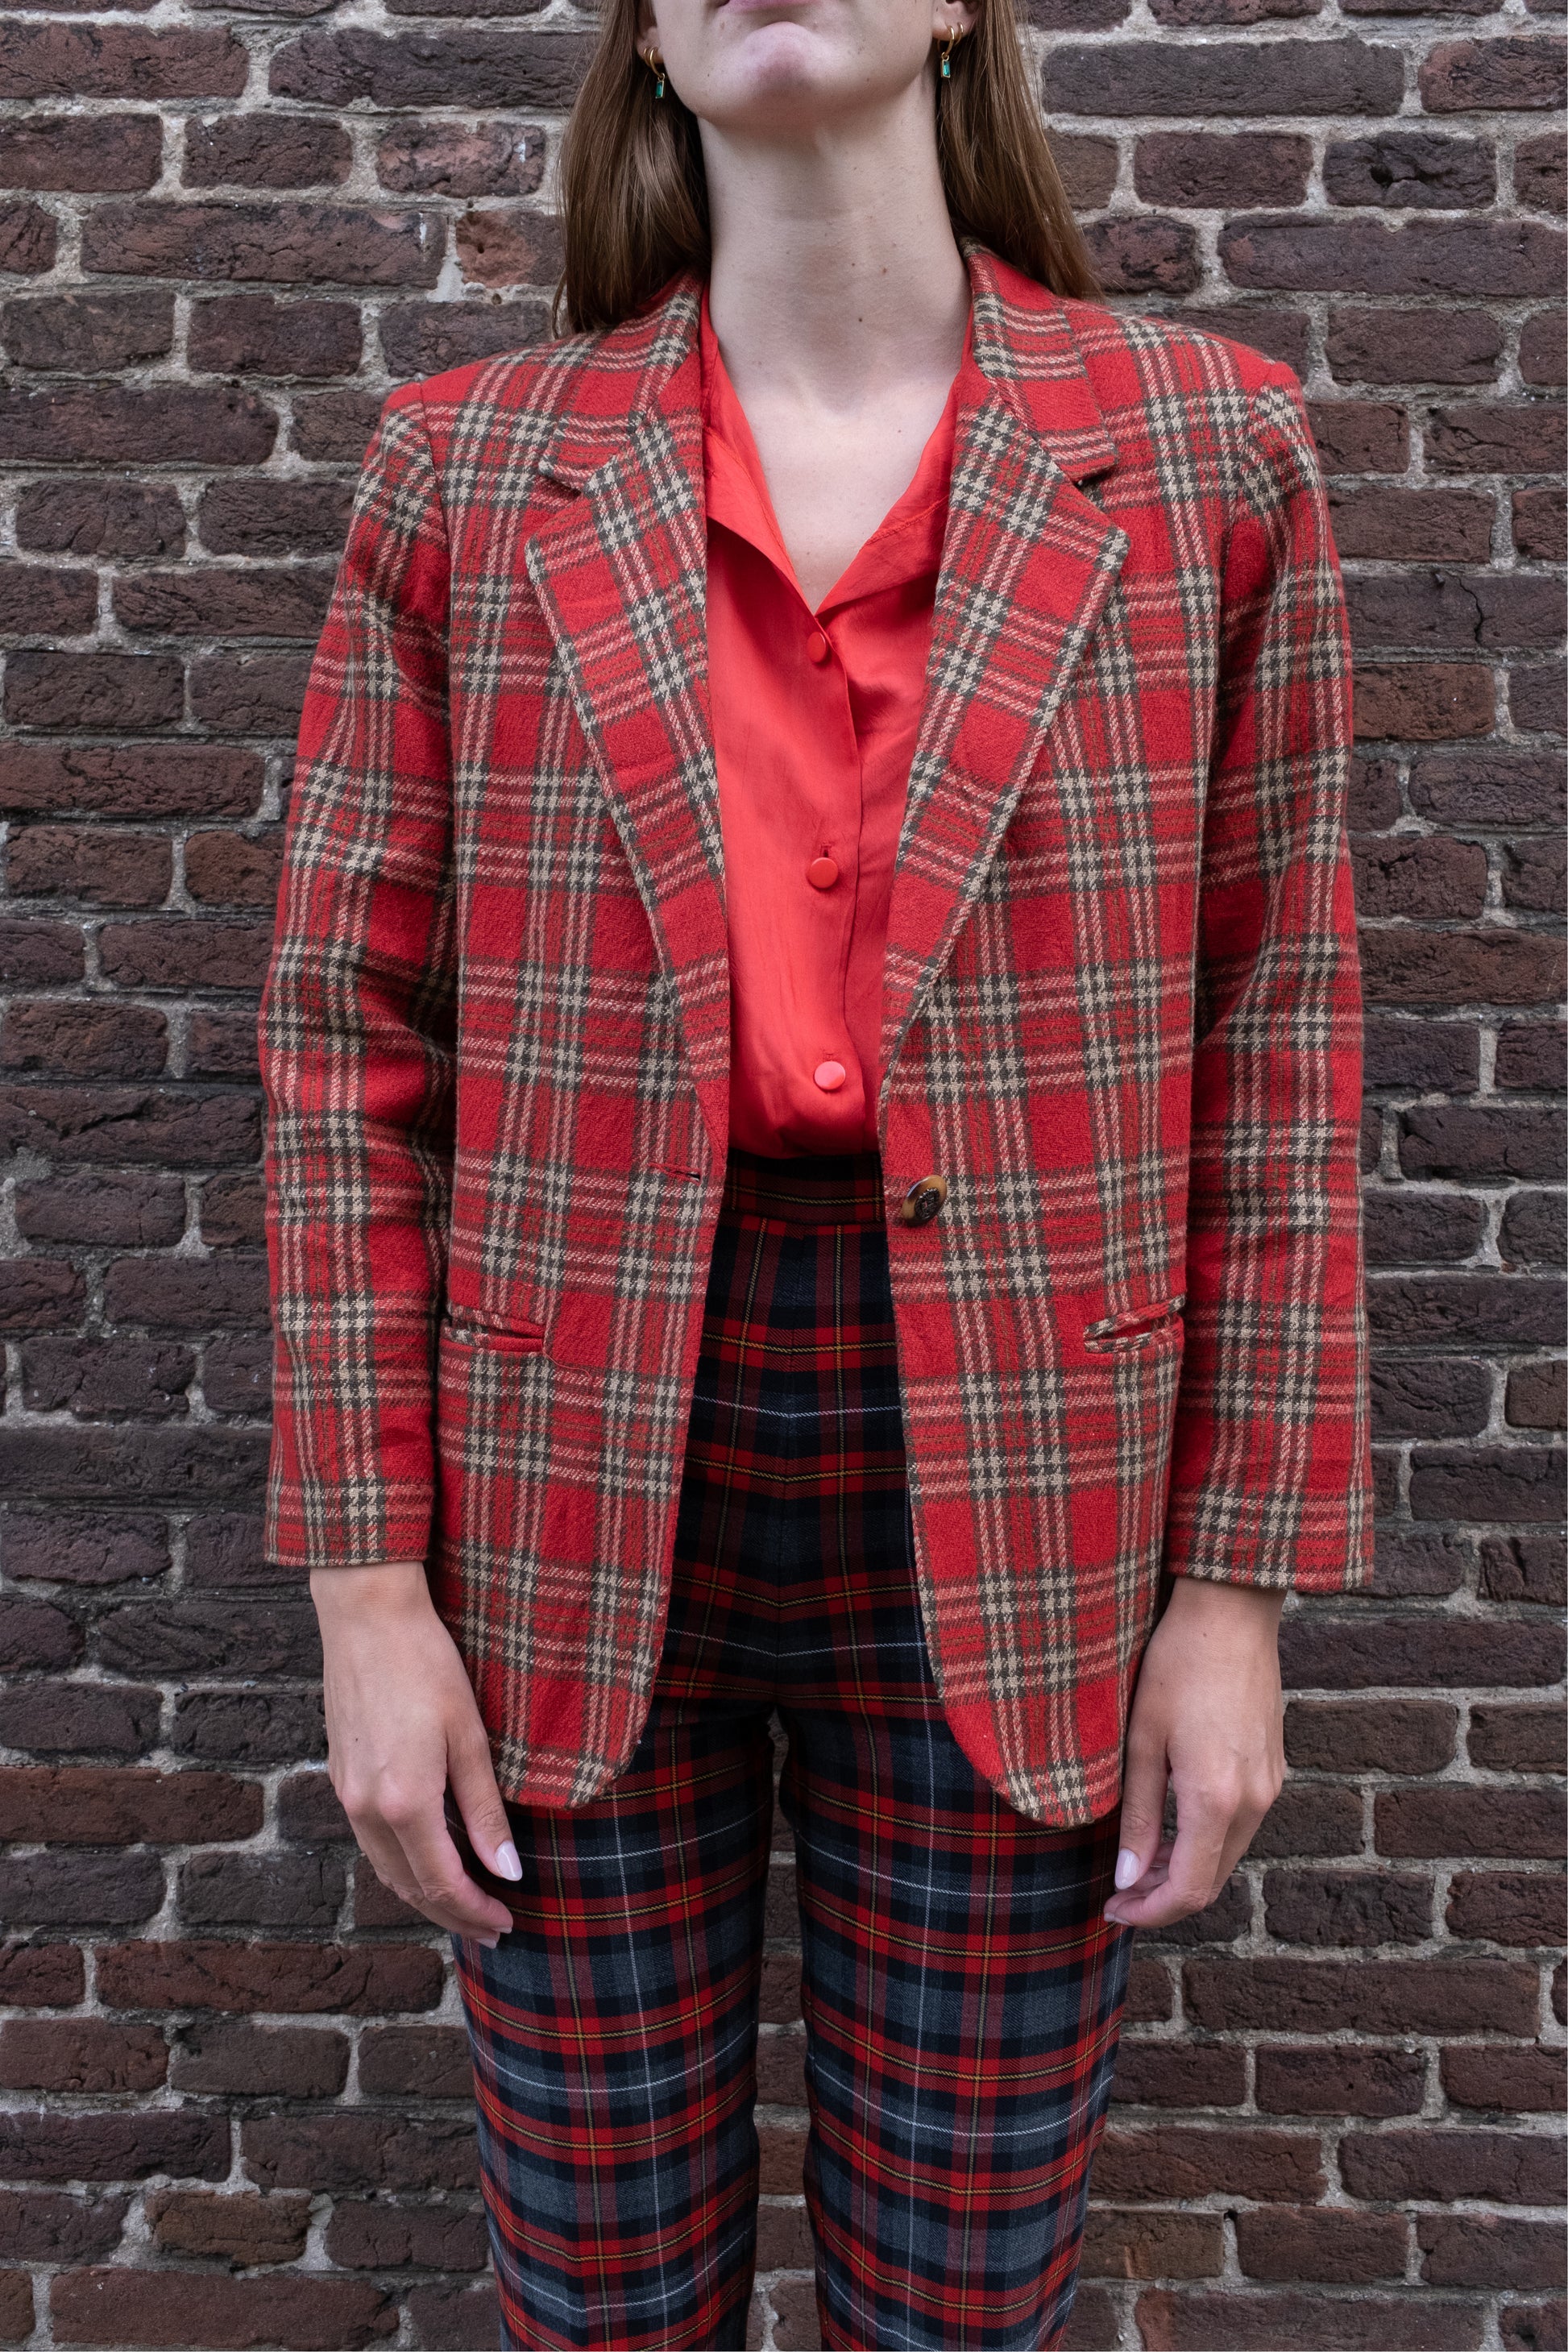    red-suit-check-print-rood-pak-geruit